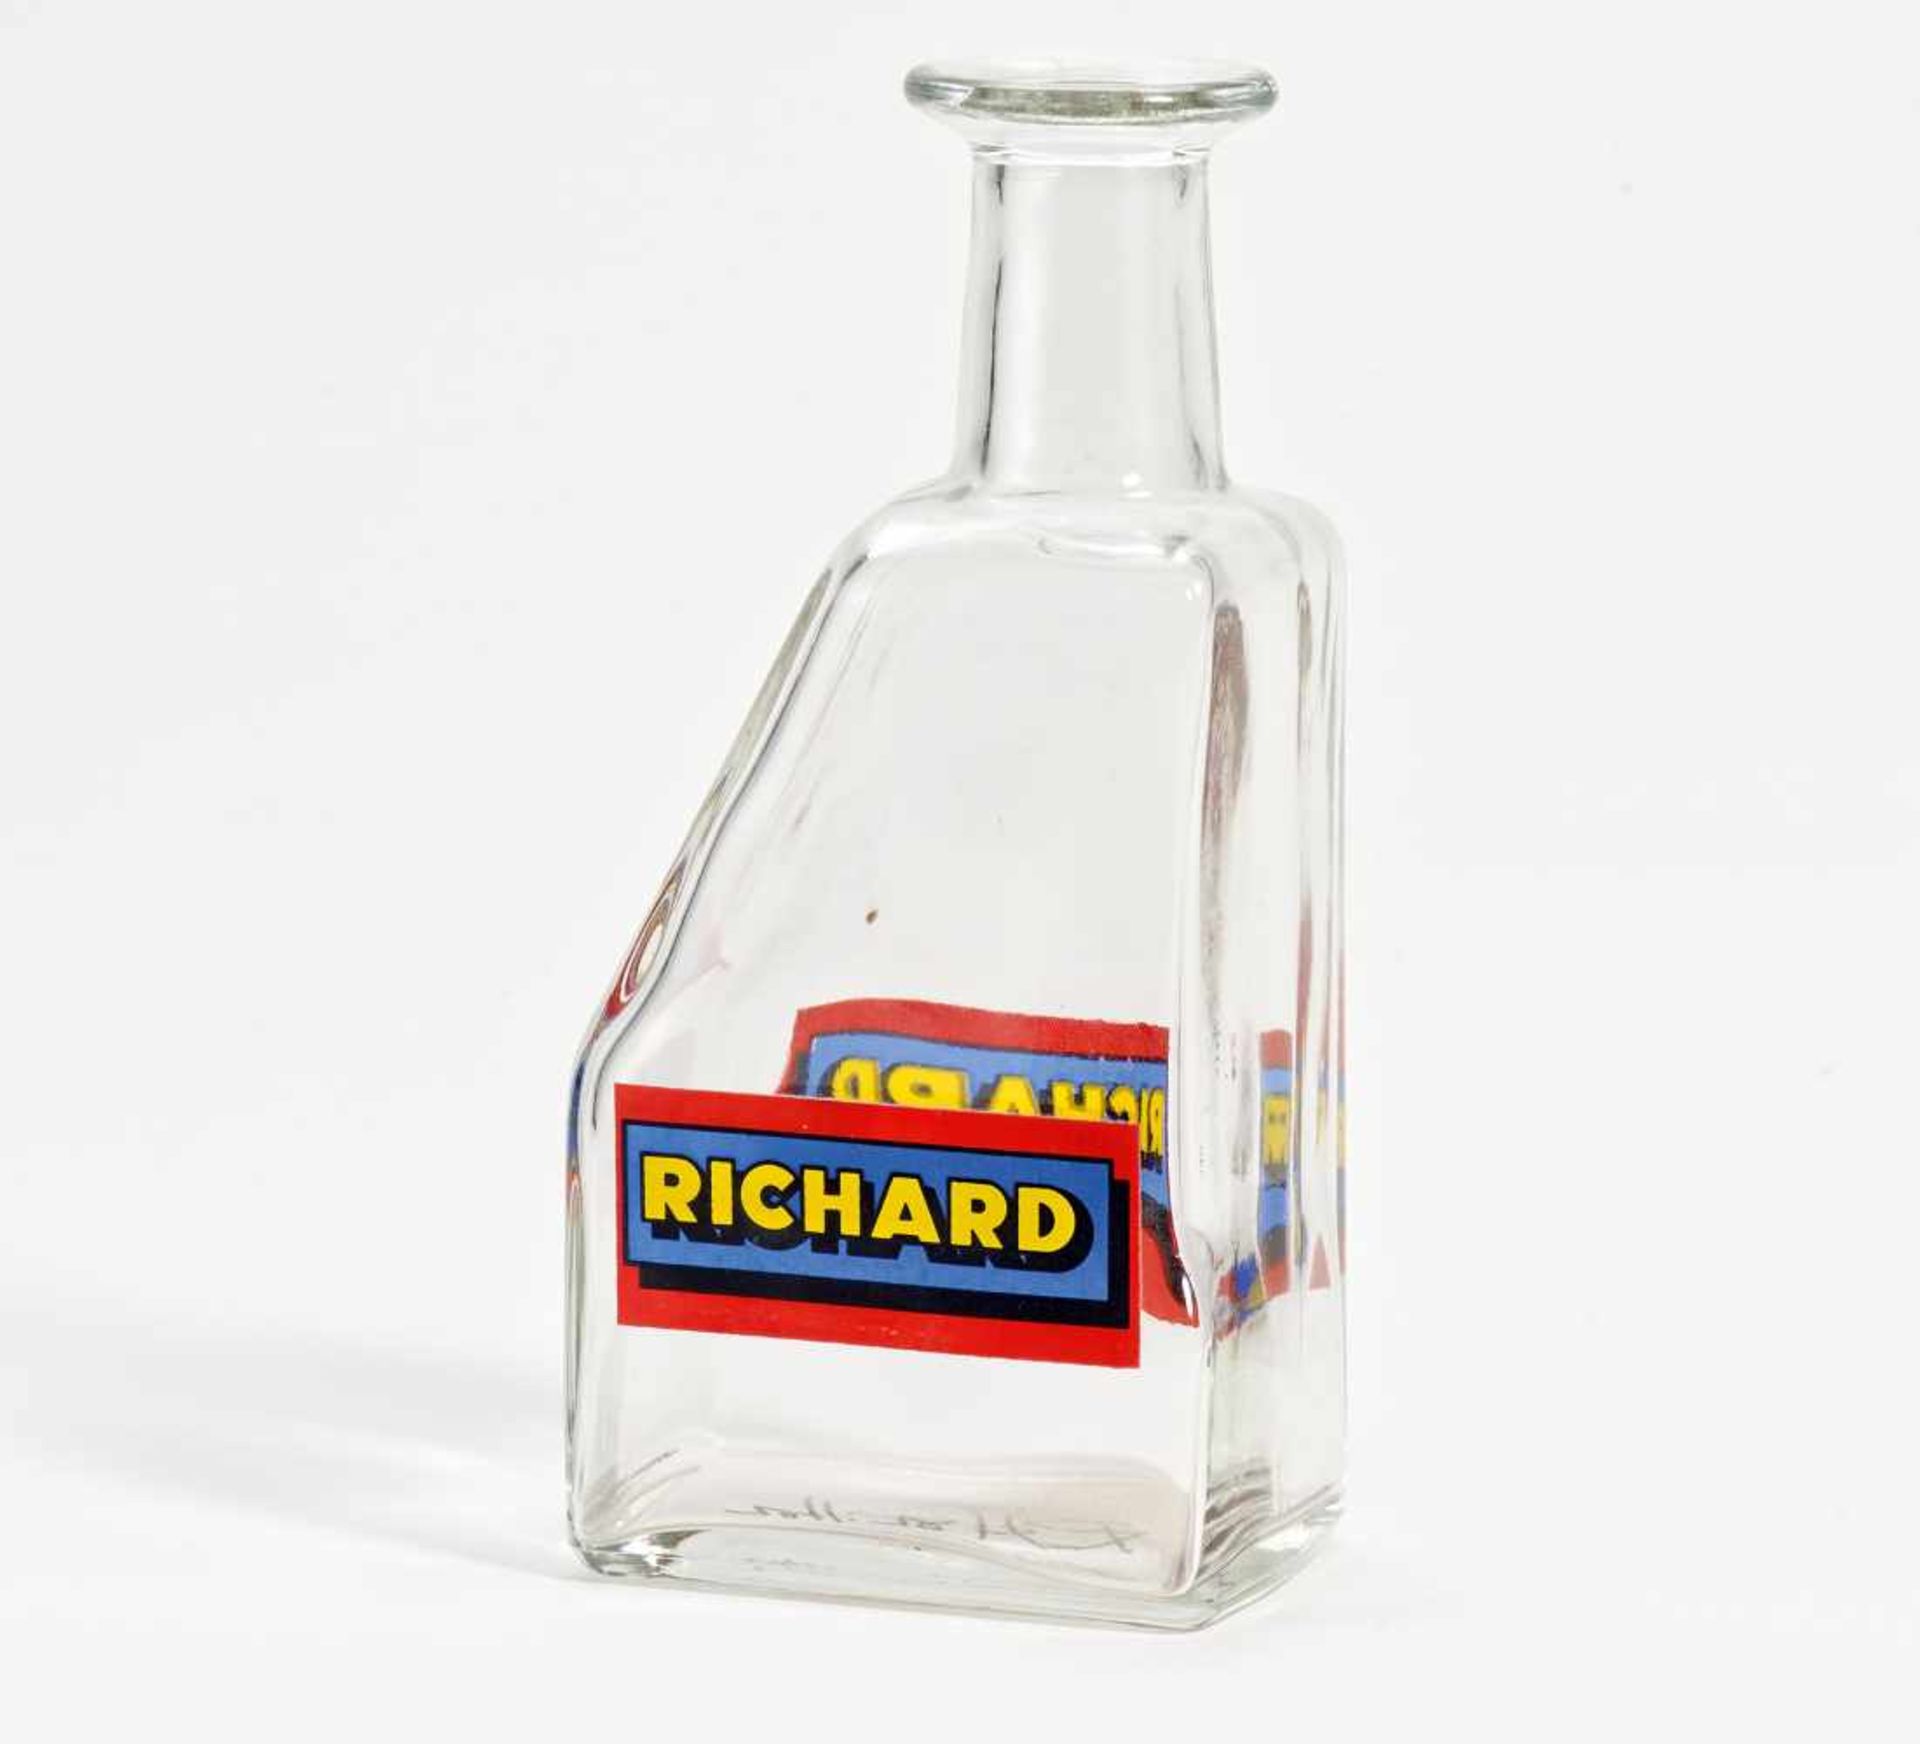 Hamilton, RichardLondon 1922 - 2011Carafe. 1978. Glas, mit Emaille-Farbe bemalt. 20 x 9,5 x 6cm.